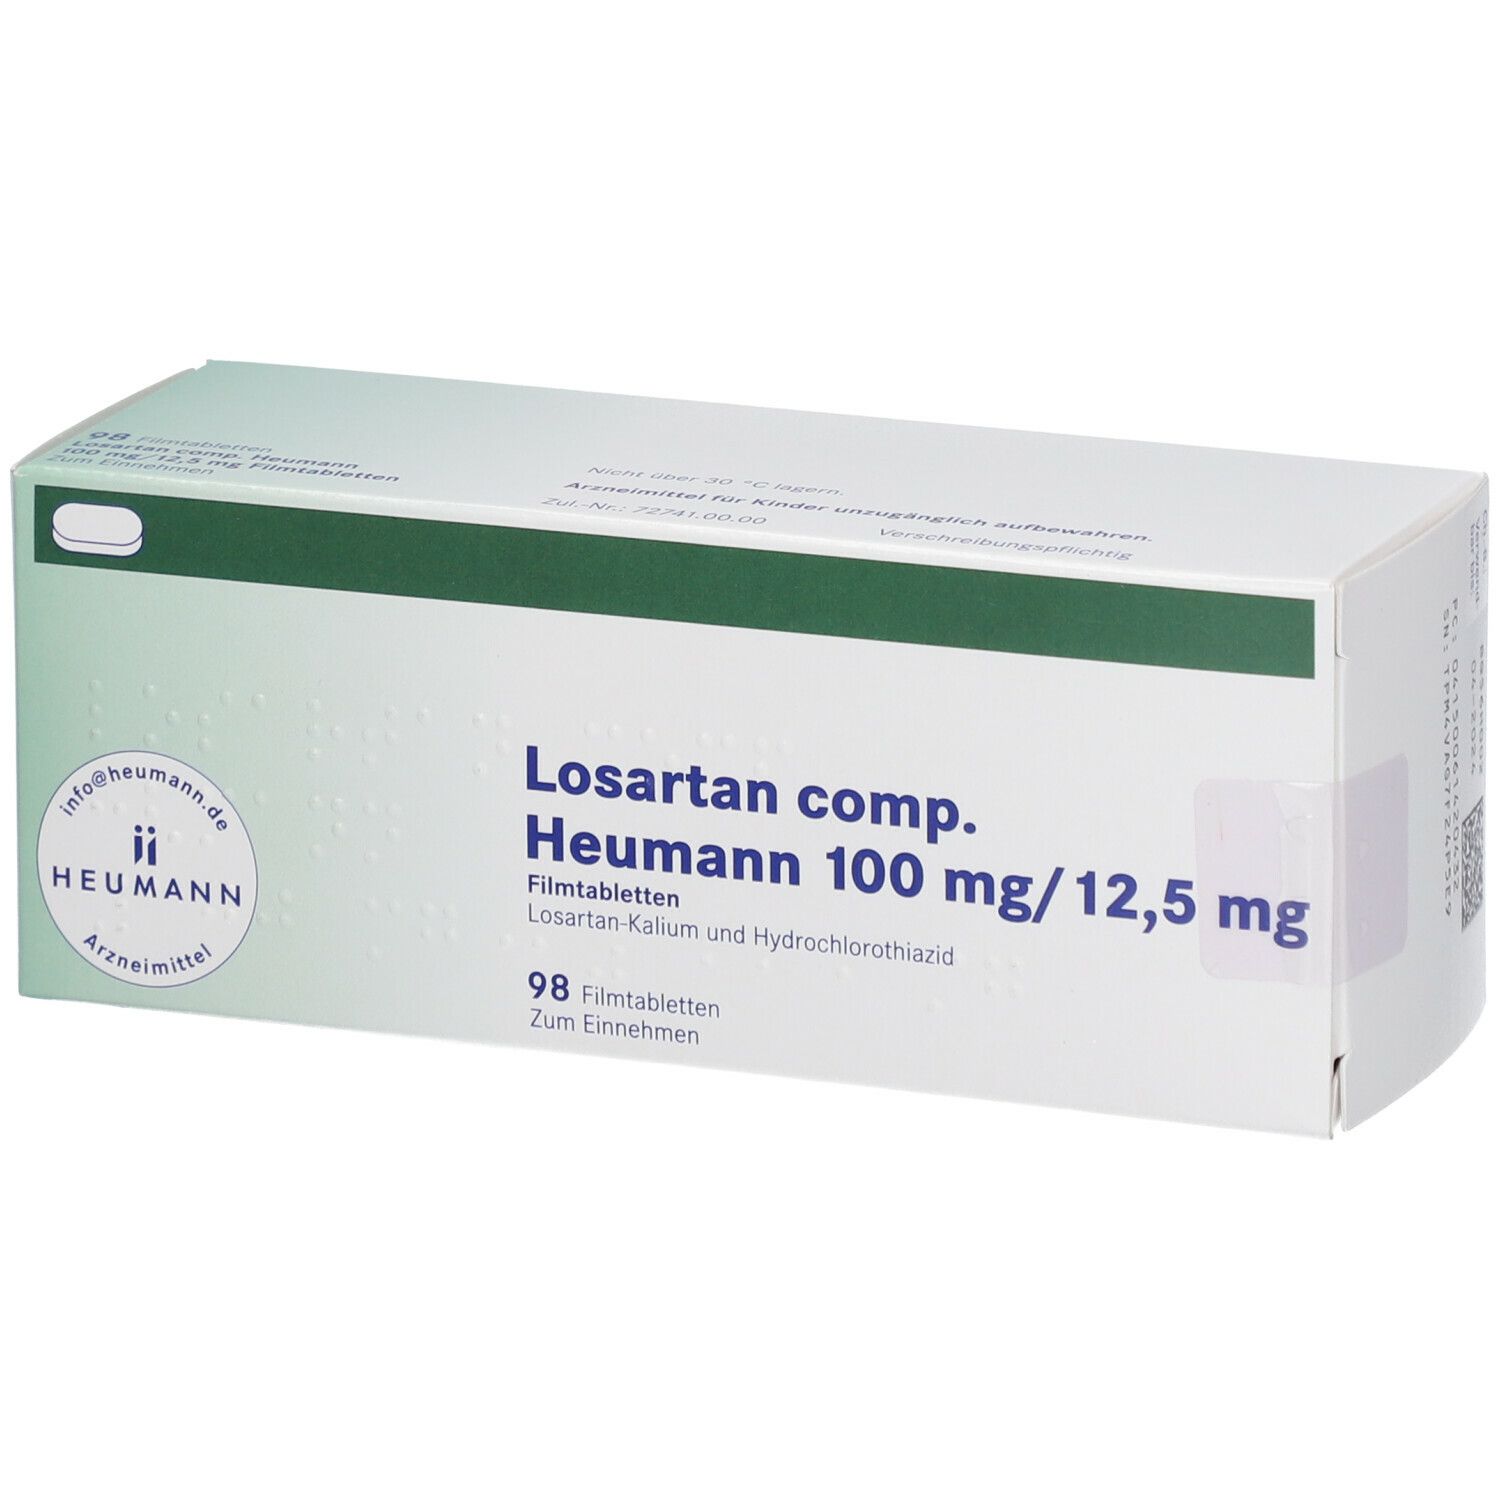 Losartan comp. Heumann 100 mg/12,5 mg